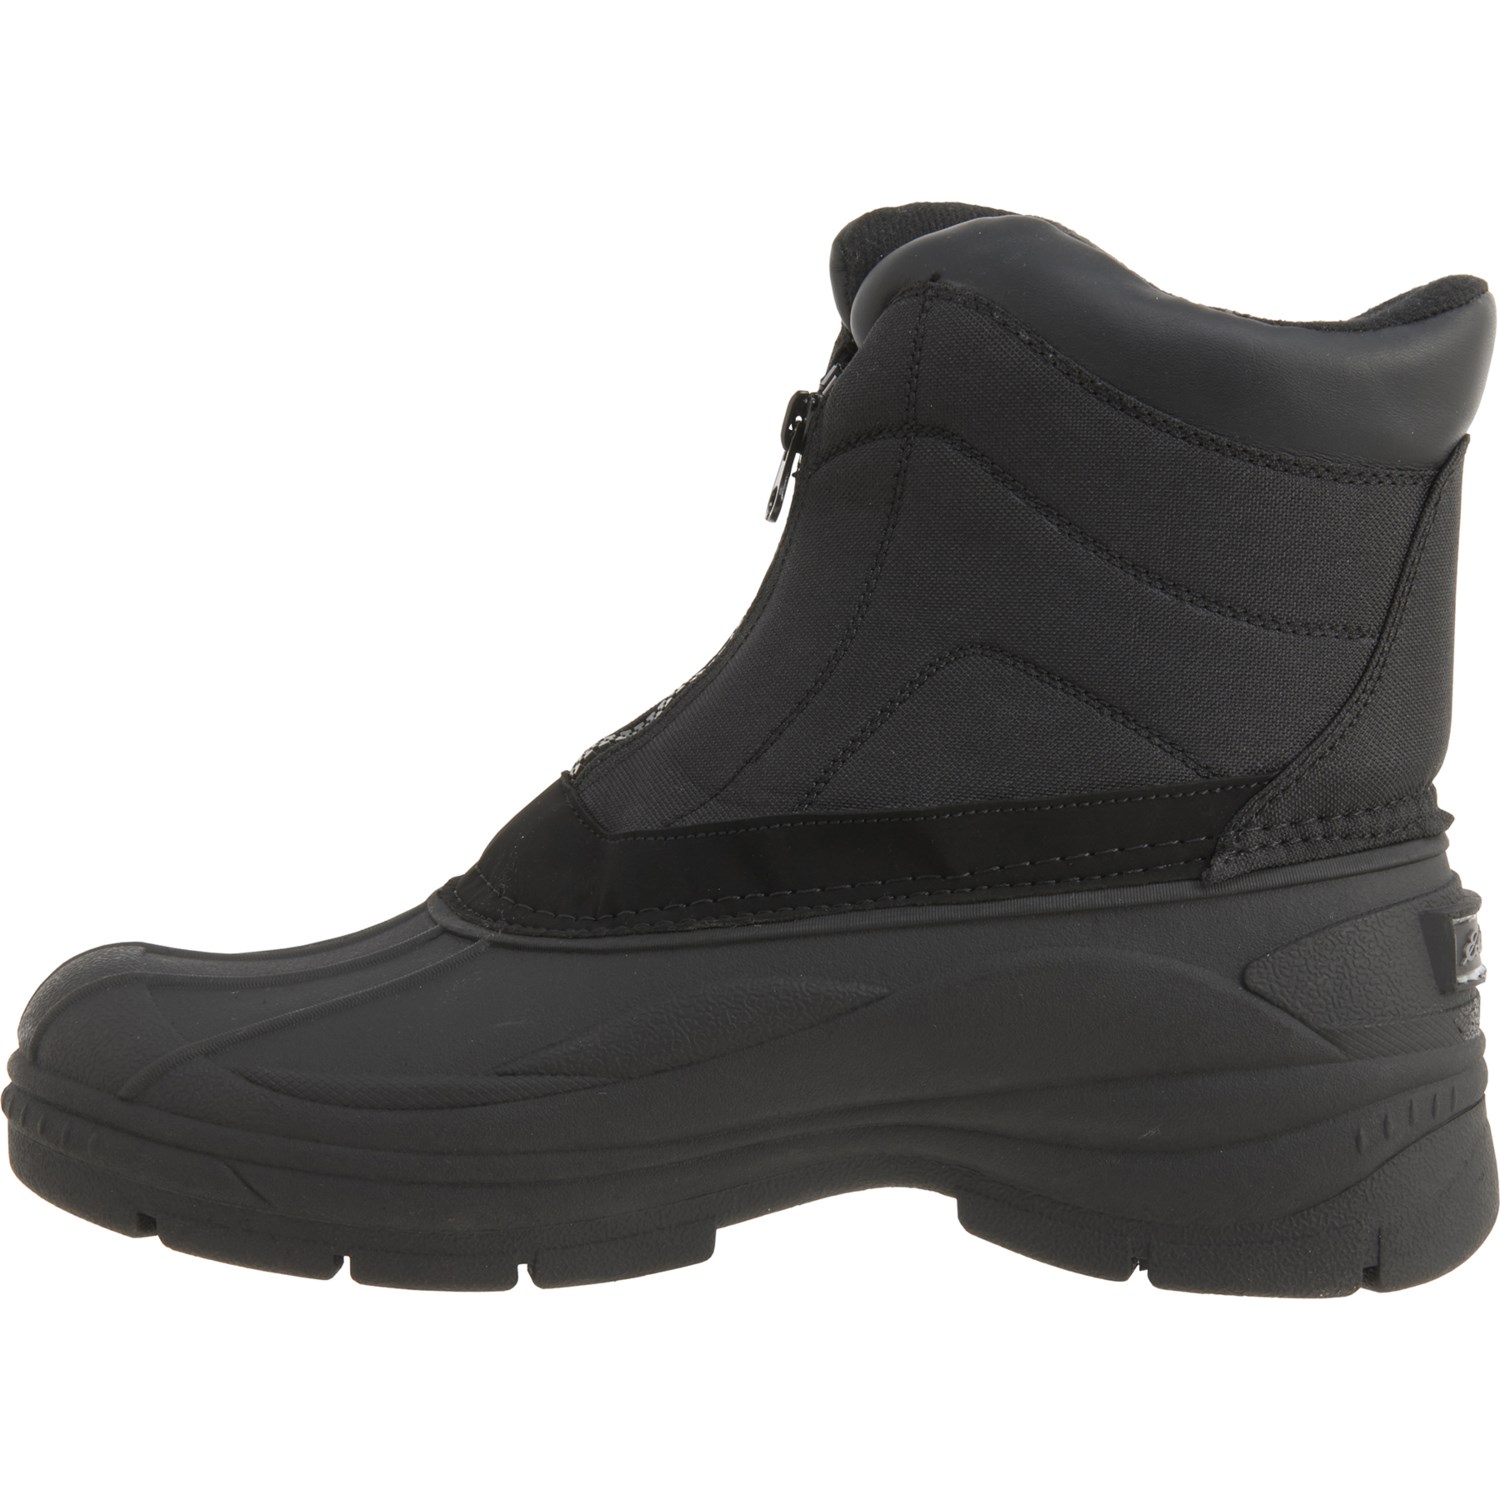 Eddie Bauer Lake Crescent Winter Boots (For Men) - Save 55%